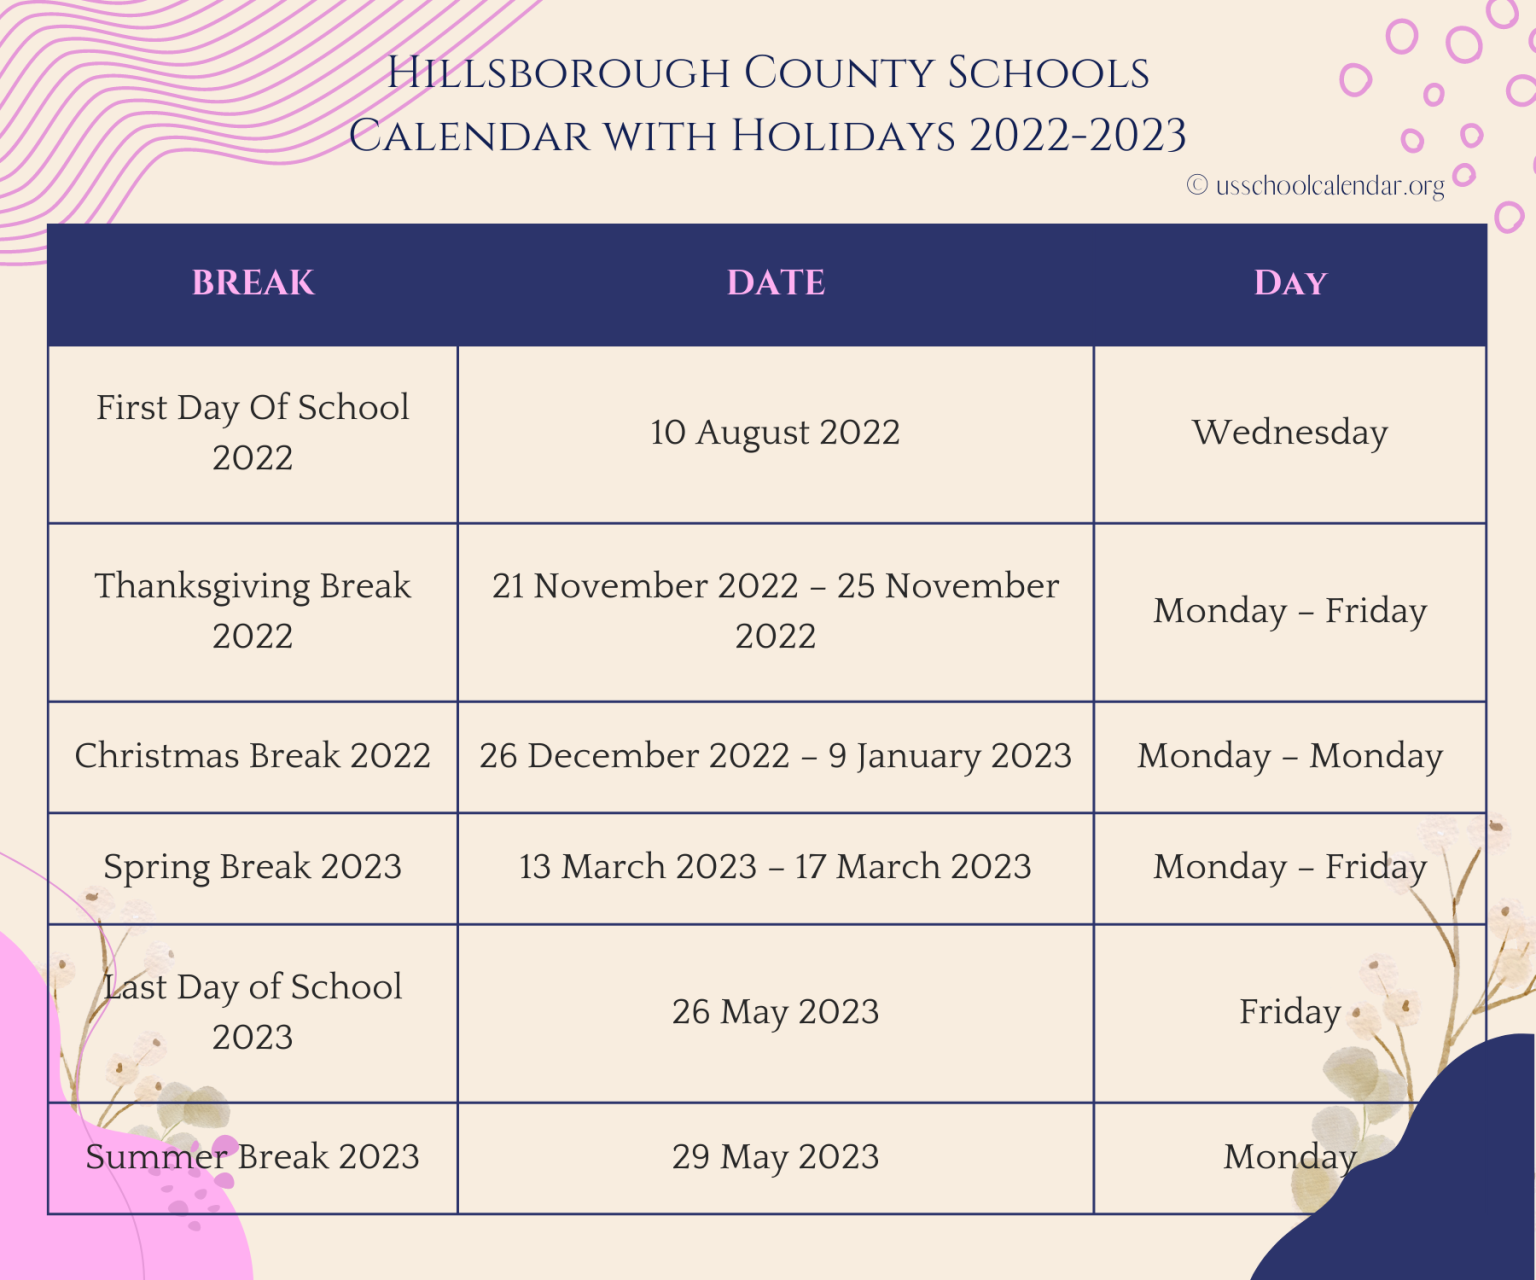 Hillsborough County Schools Calendar with Holidays 20222023